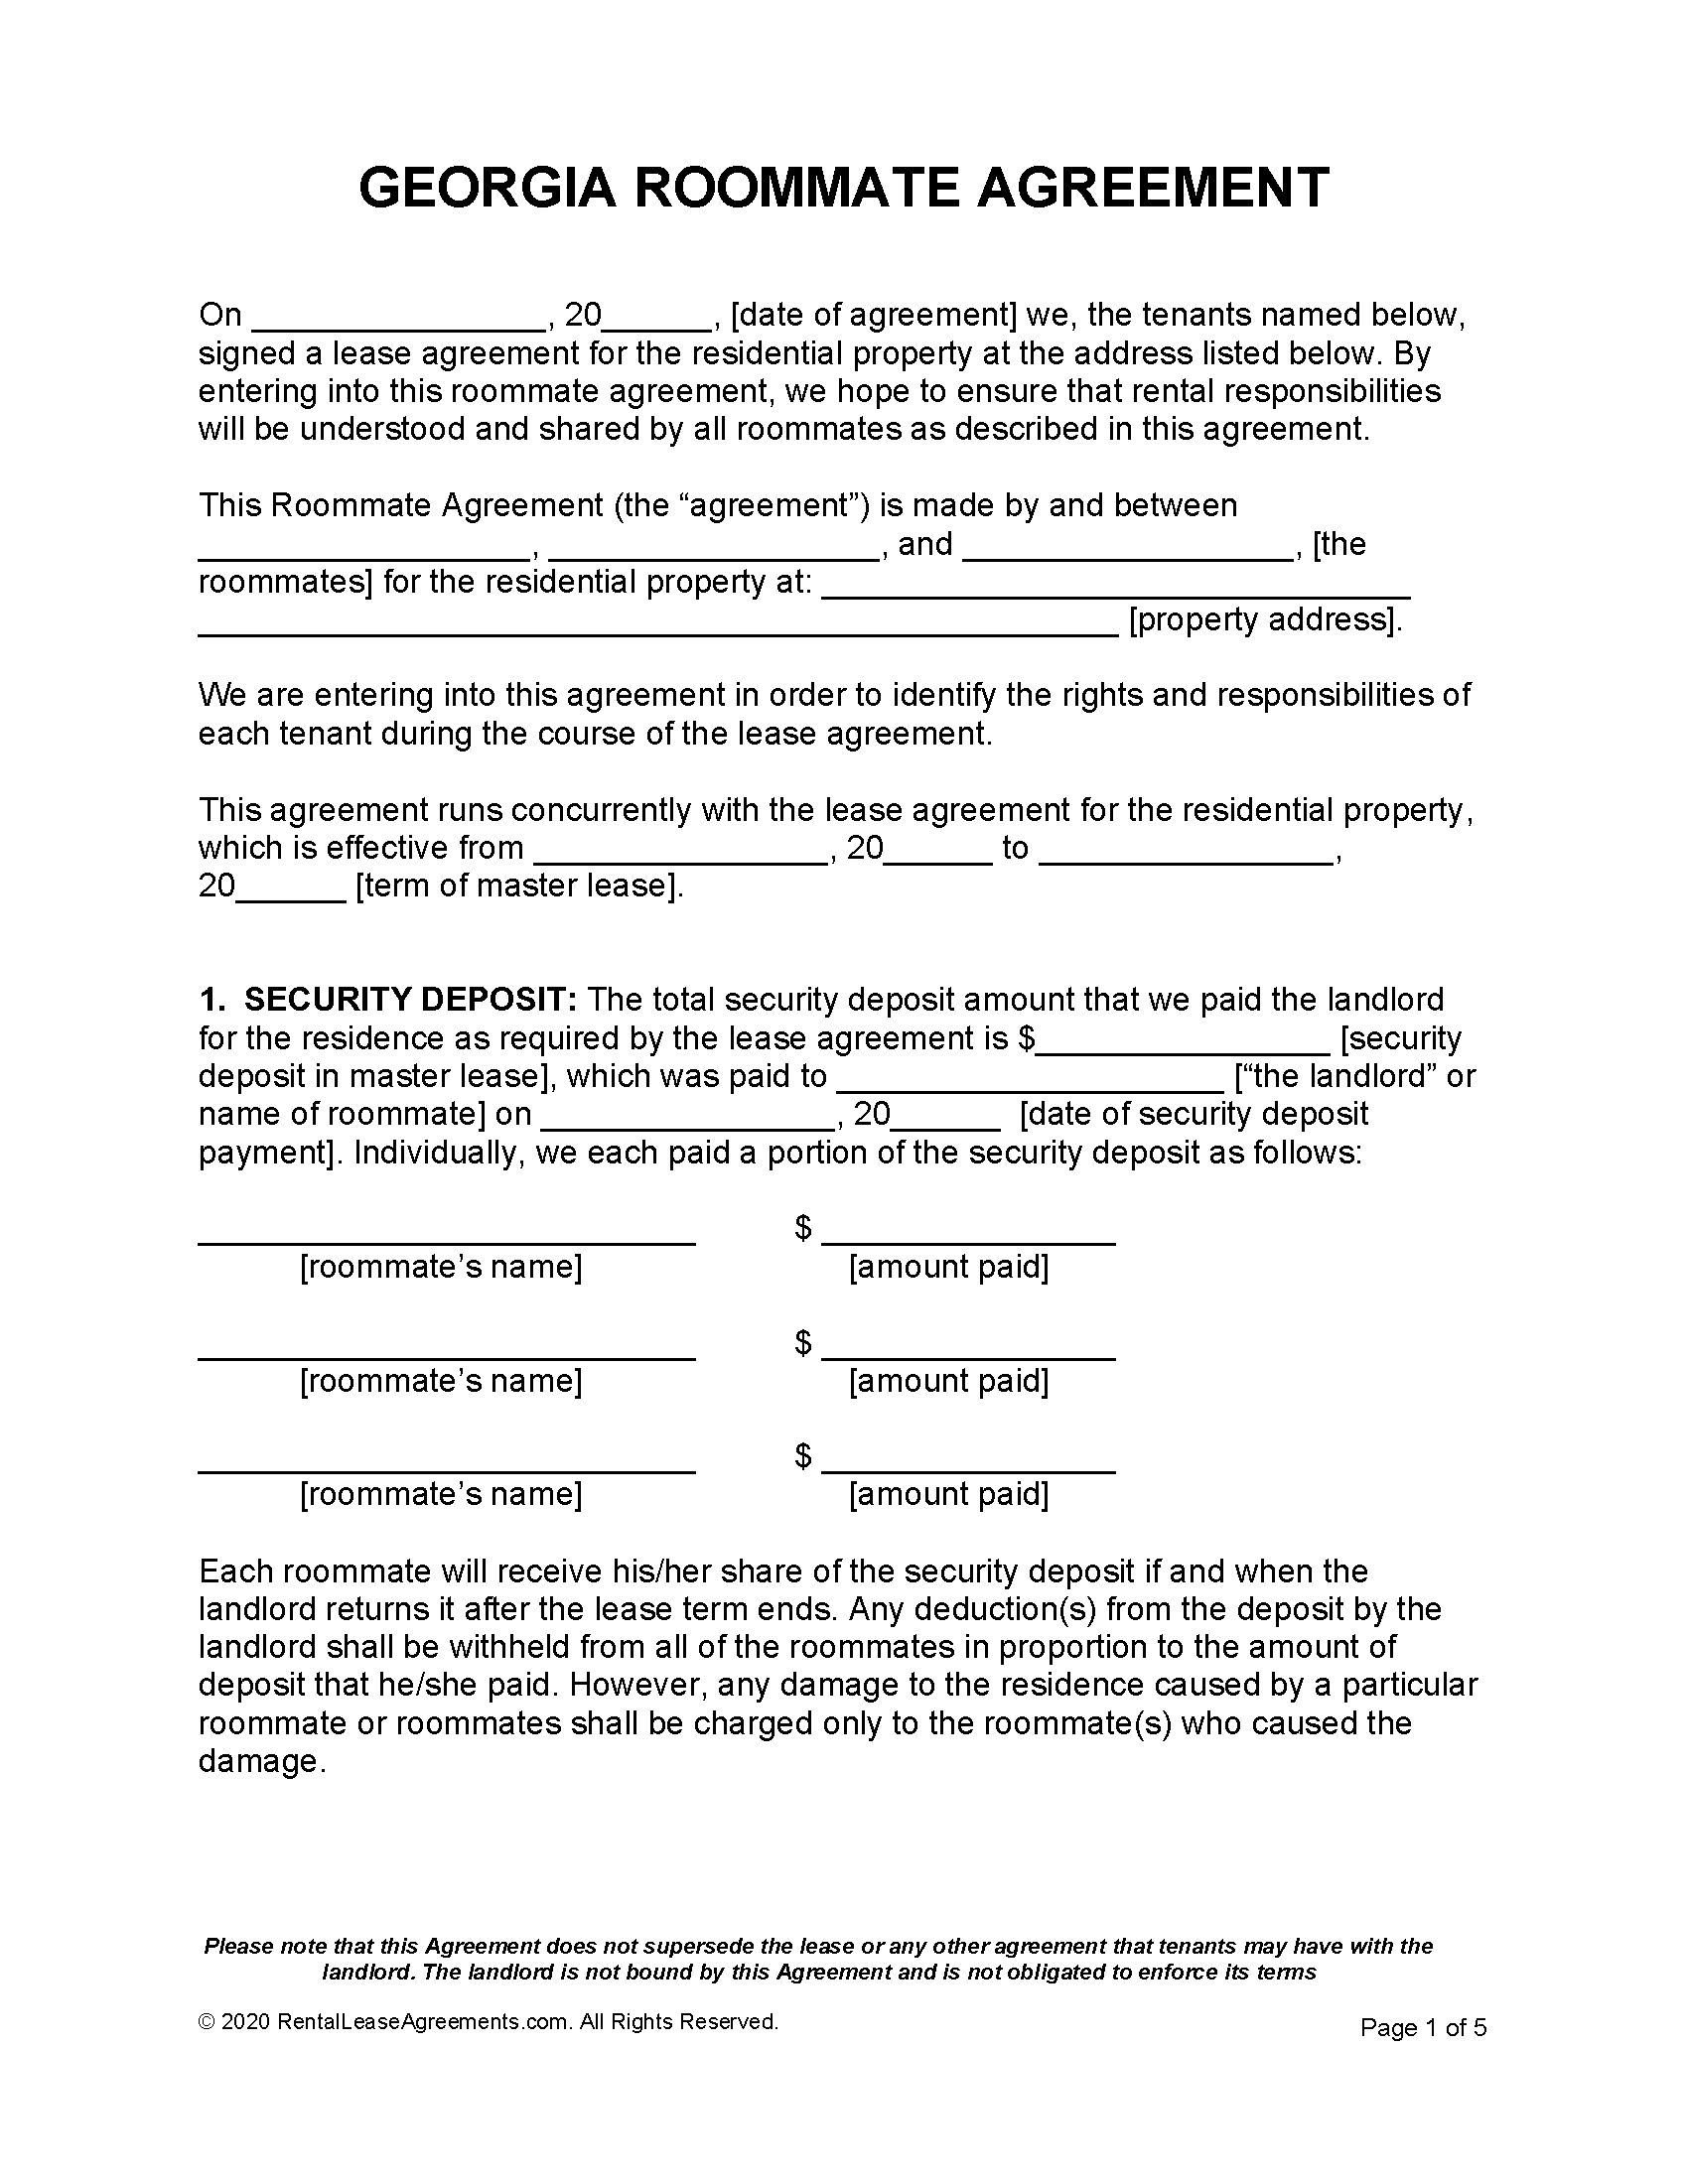 free-georgia-roommate-agreement-template-pdf-ms-word